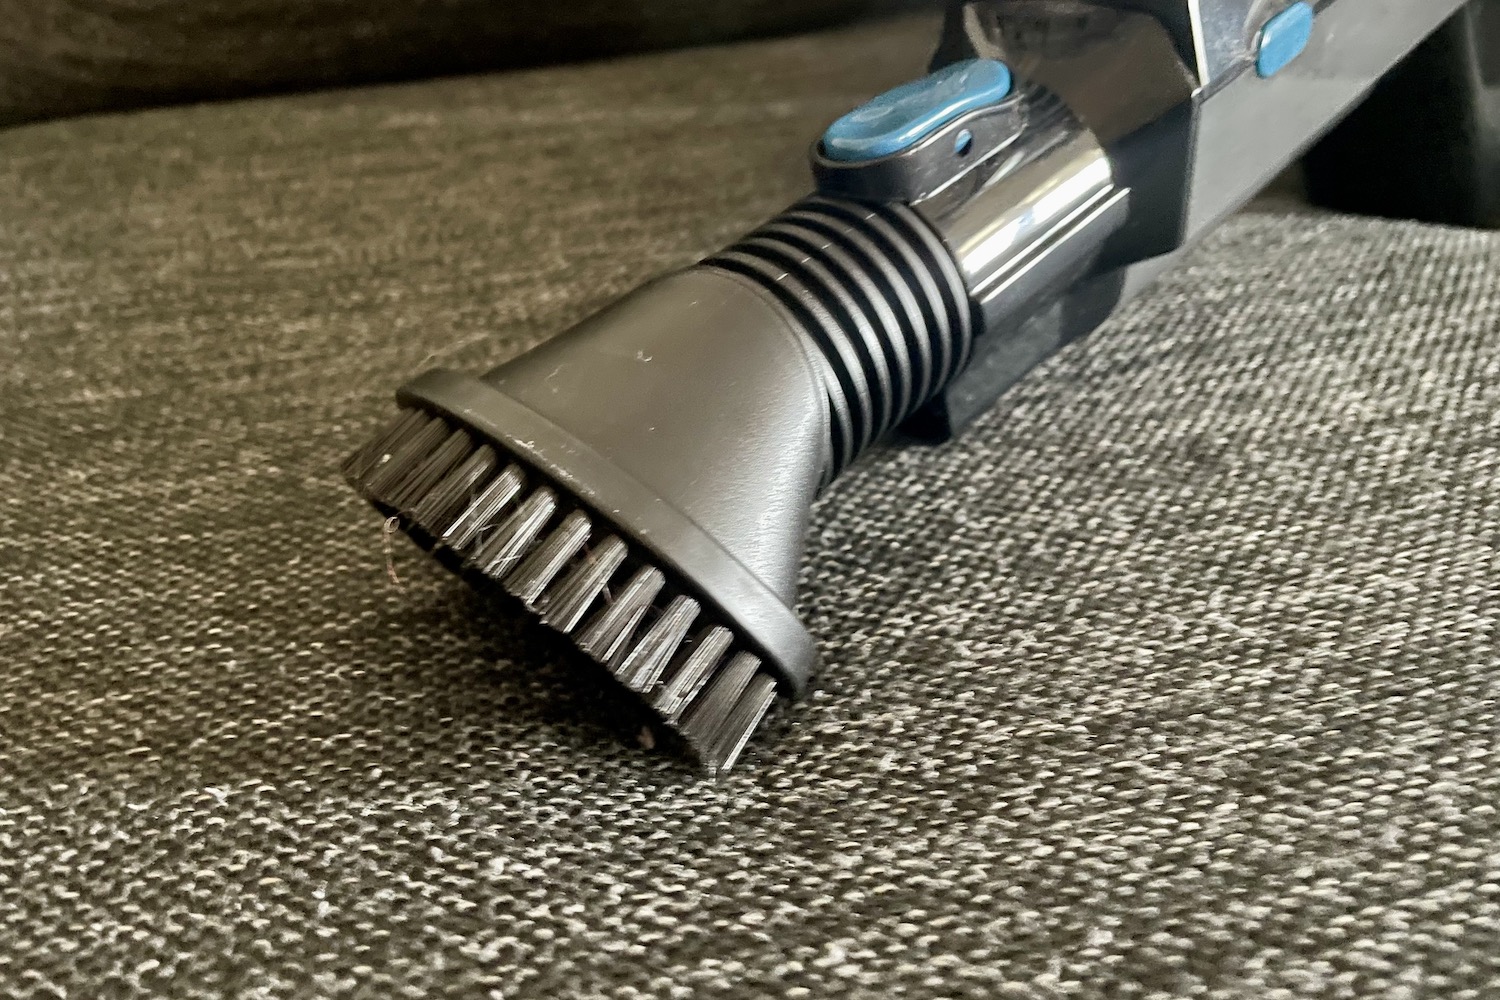 Proscenic P11 Smart Cordless Vacuum Cleaner Stick Vacuum PETS HOOVER SP120